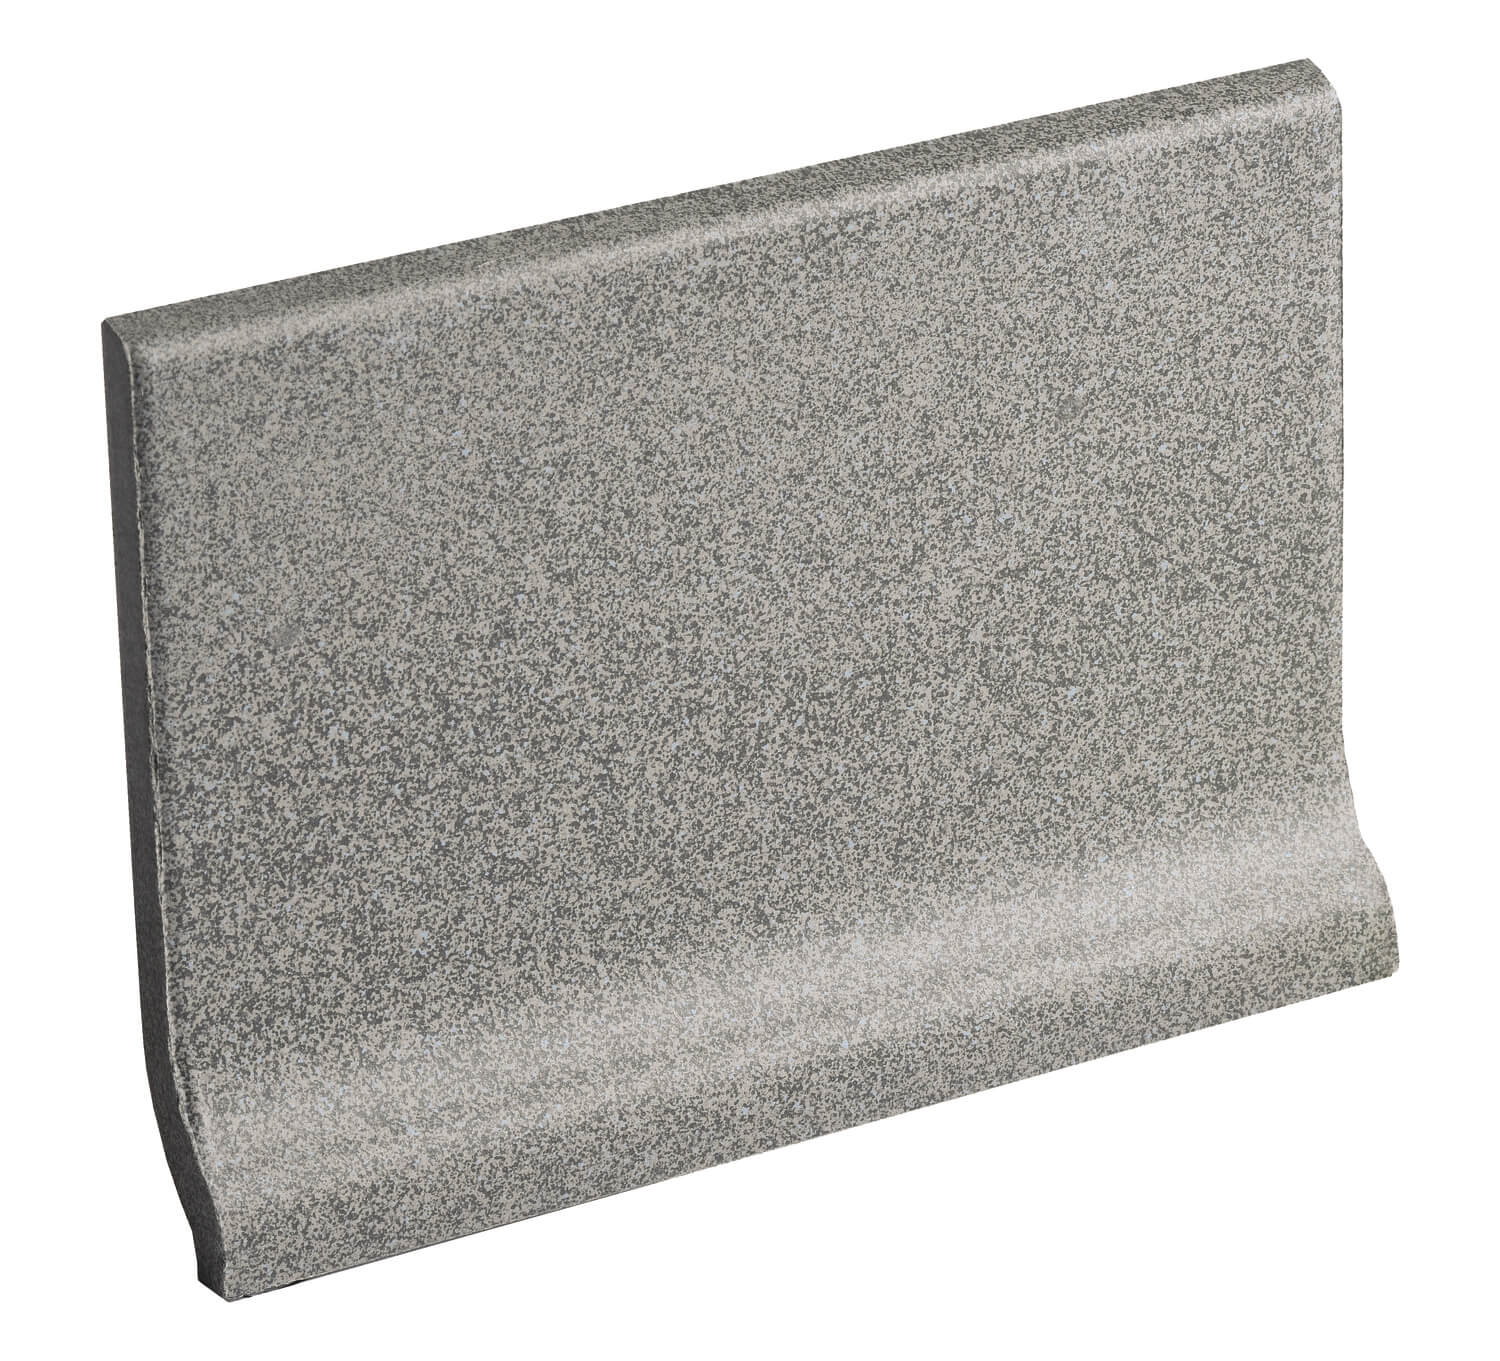 Dorset Woolliscroft Coving Dark Grey Quarry Tile 148x109mm